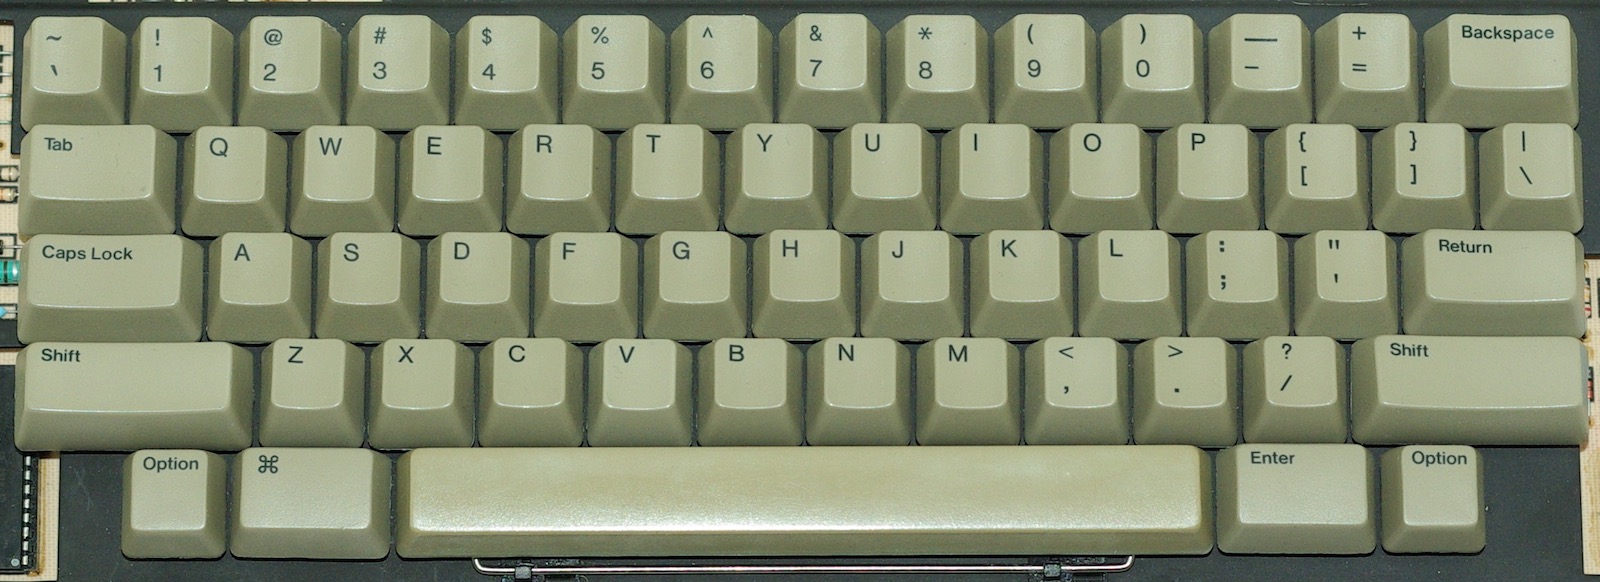 Figure 9: Original Mac keyboard, without arrows. Source: Deskthority